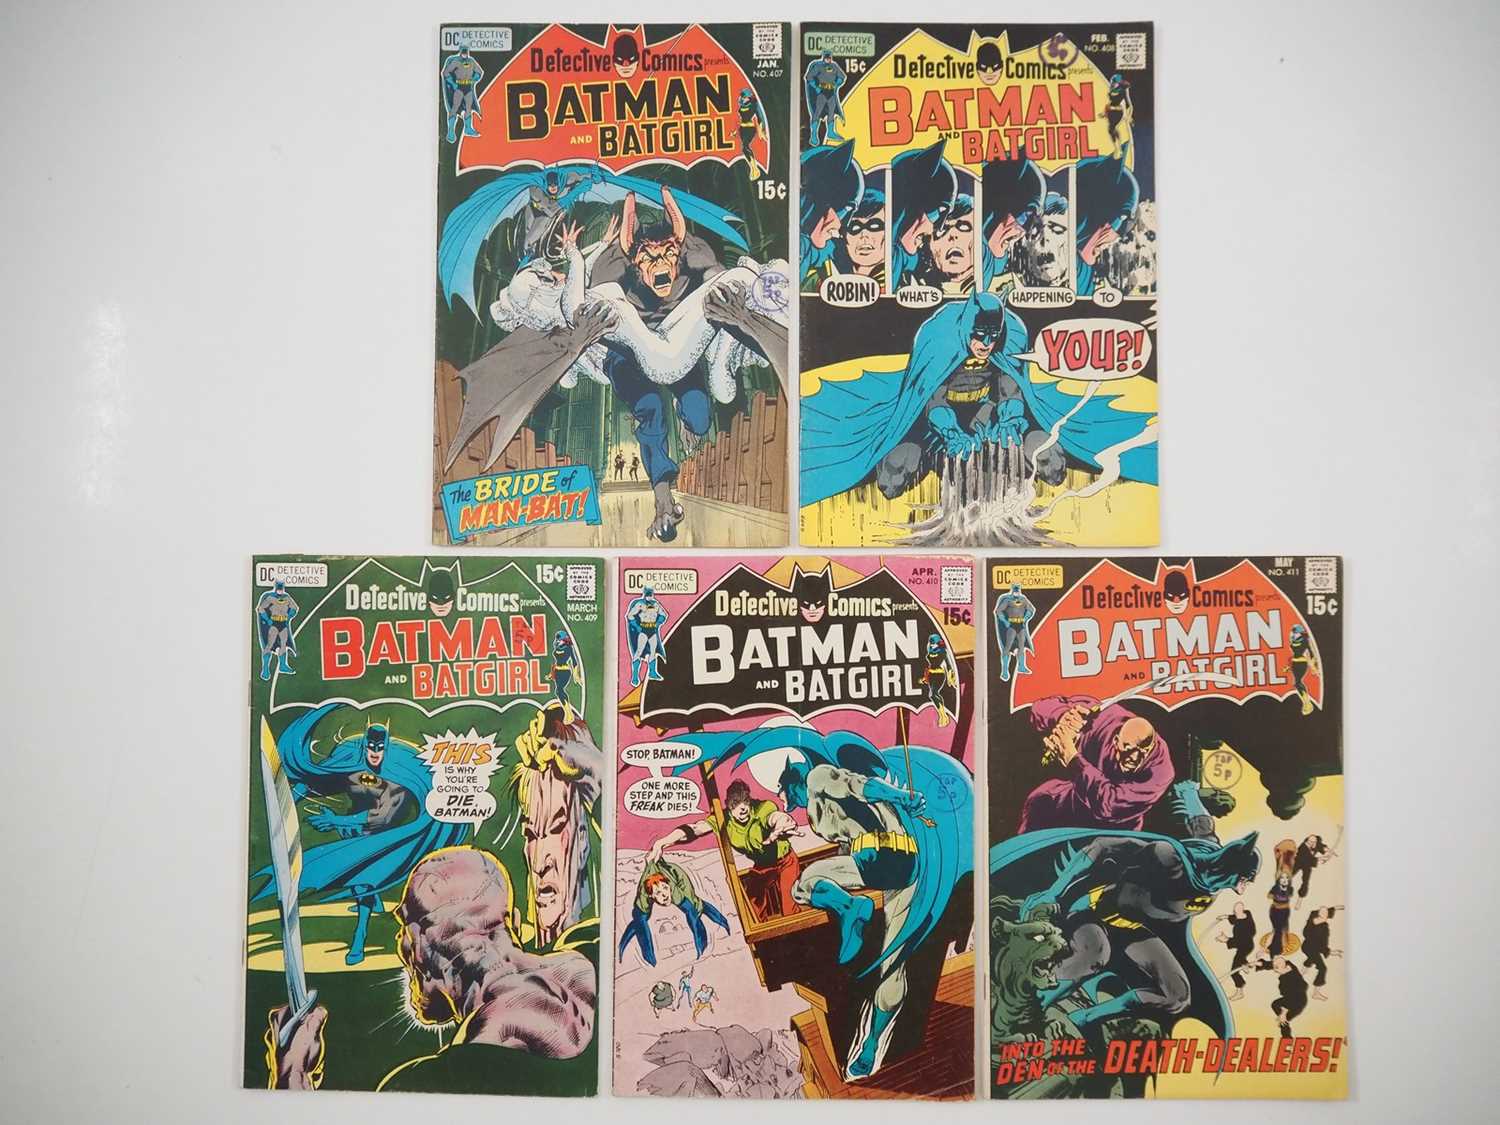 DETECTIVE COMICS: BATMAN #407, 408, 409, 410, 411 (5 in Lot) - (1971 - DC) - The third appearance of